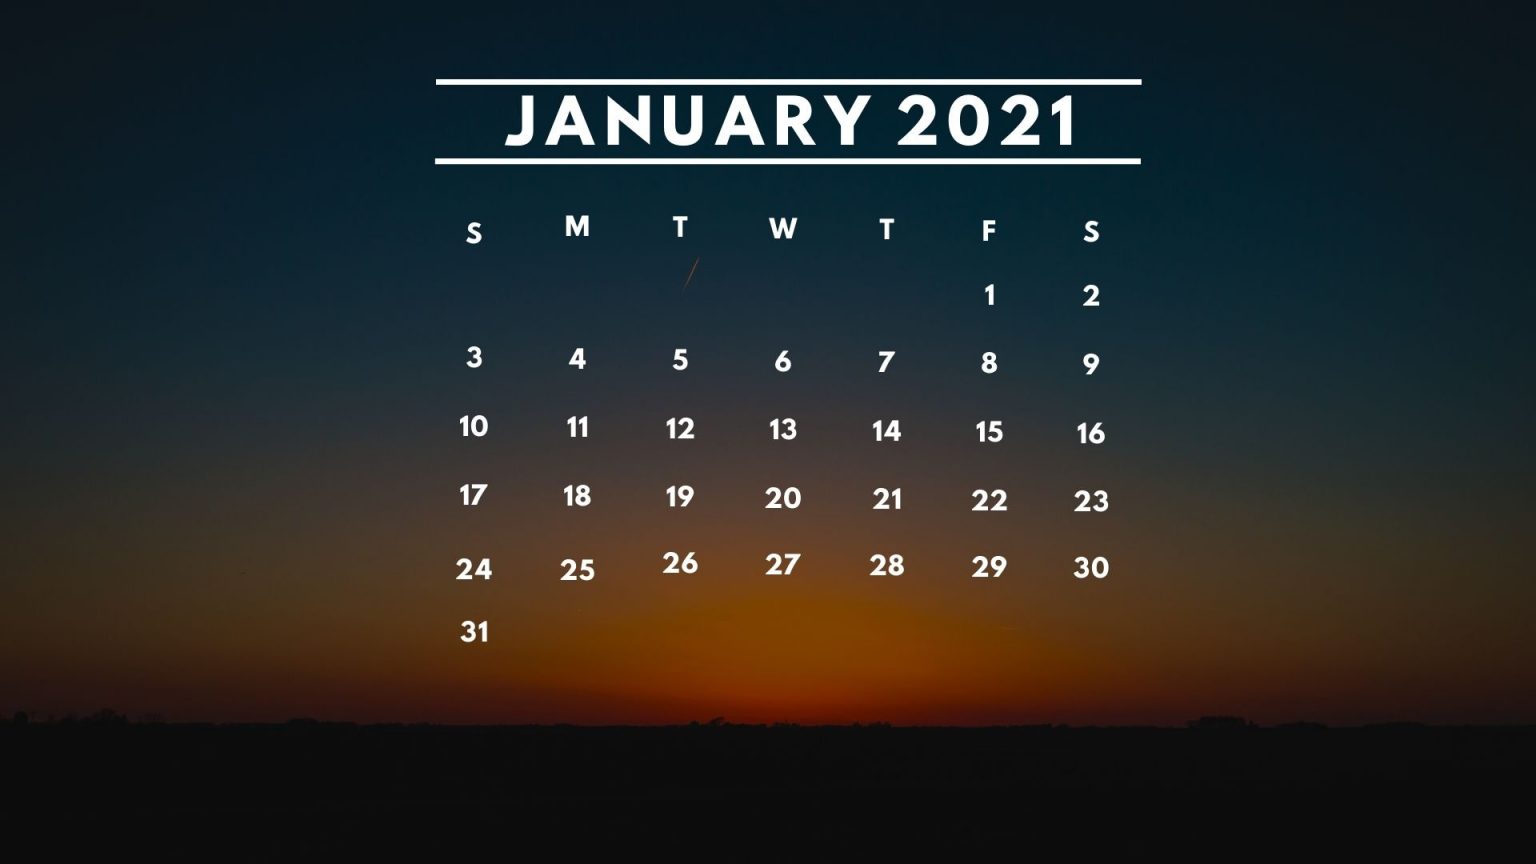 January 2021 Sunrise Calendar Wallpaper